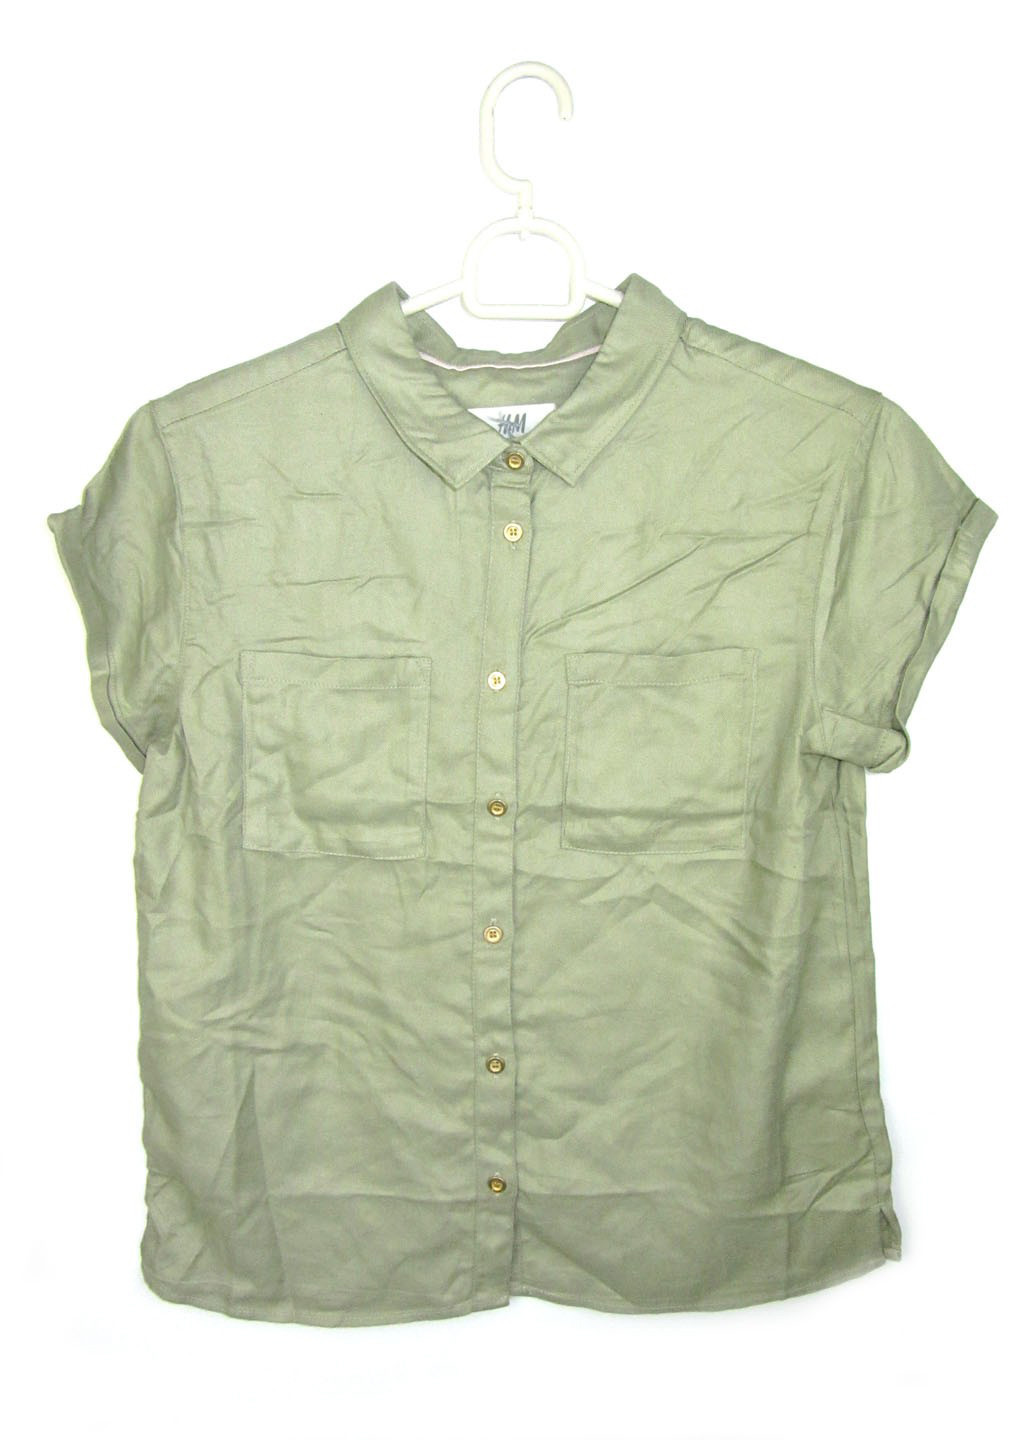 Оливковая (хаки) однотонная блузка H&M летняя